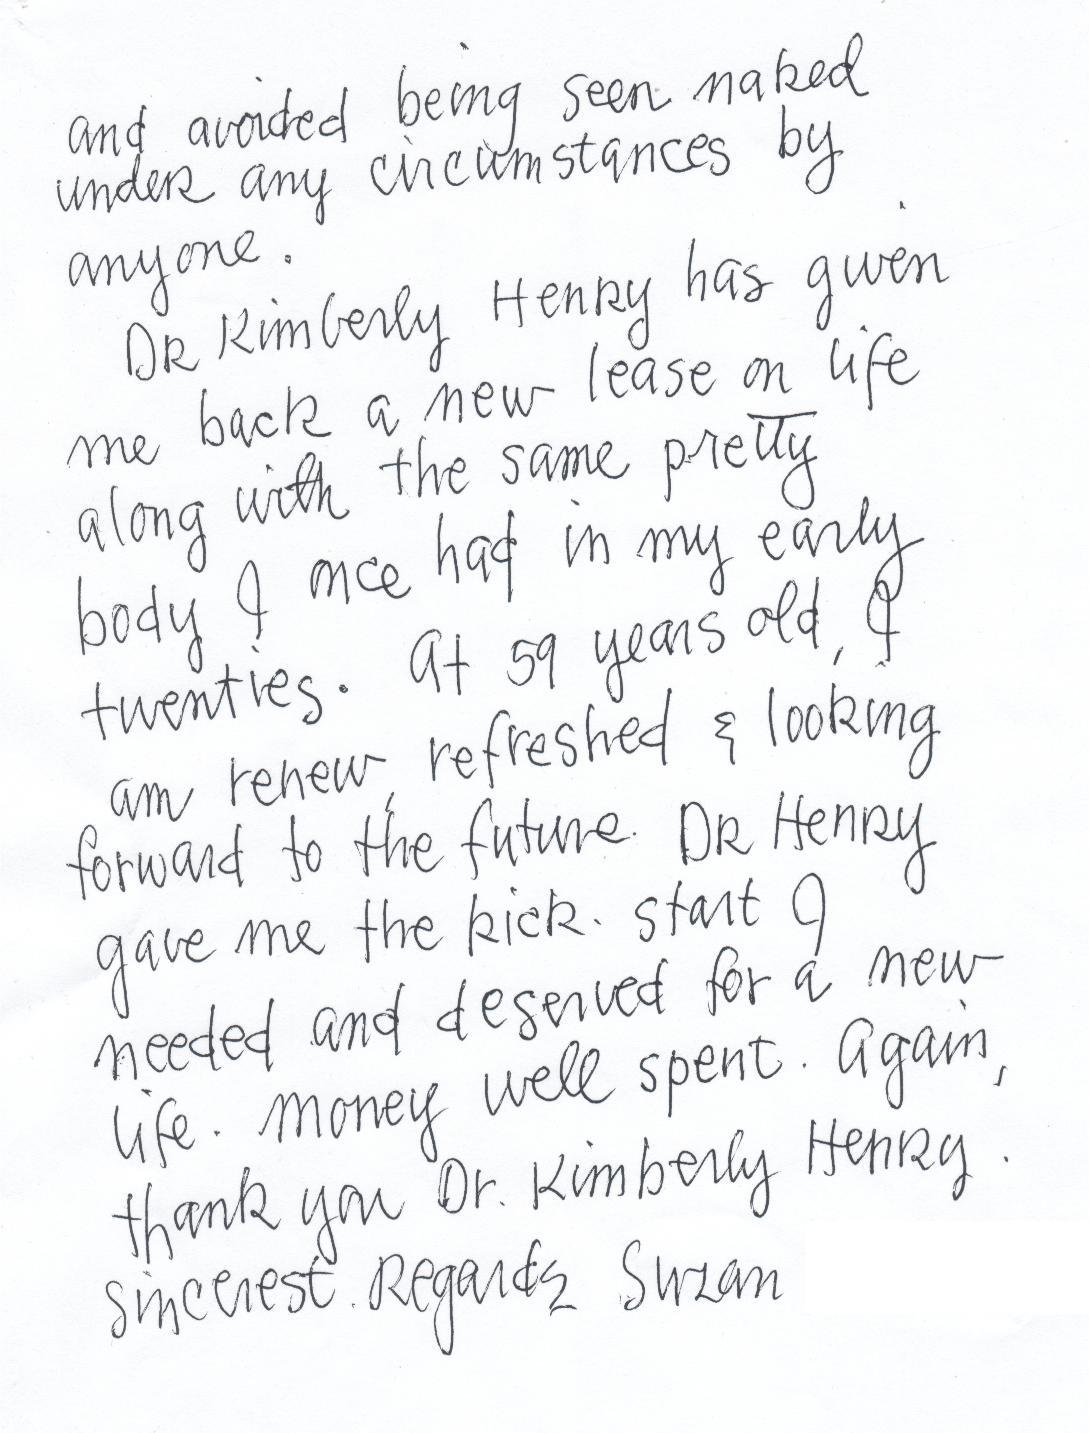 handwritten letter to dr.